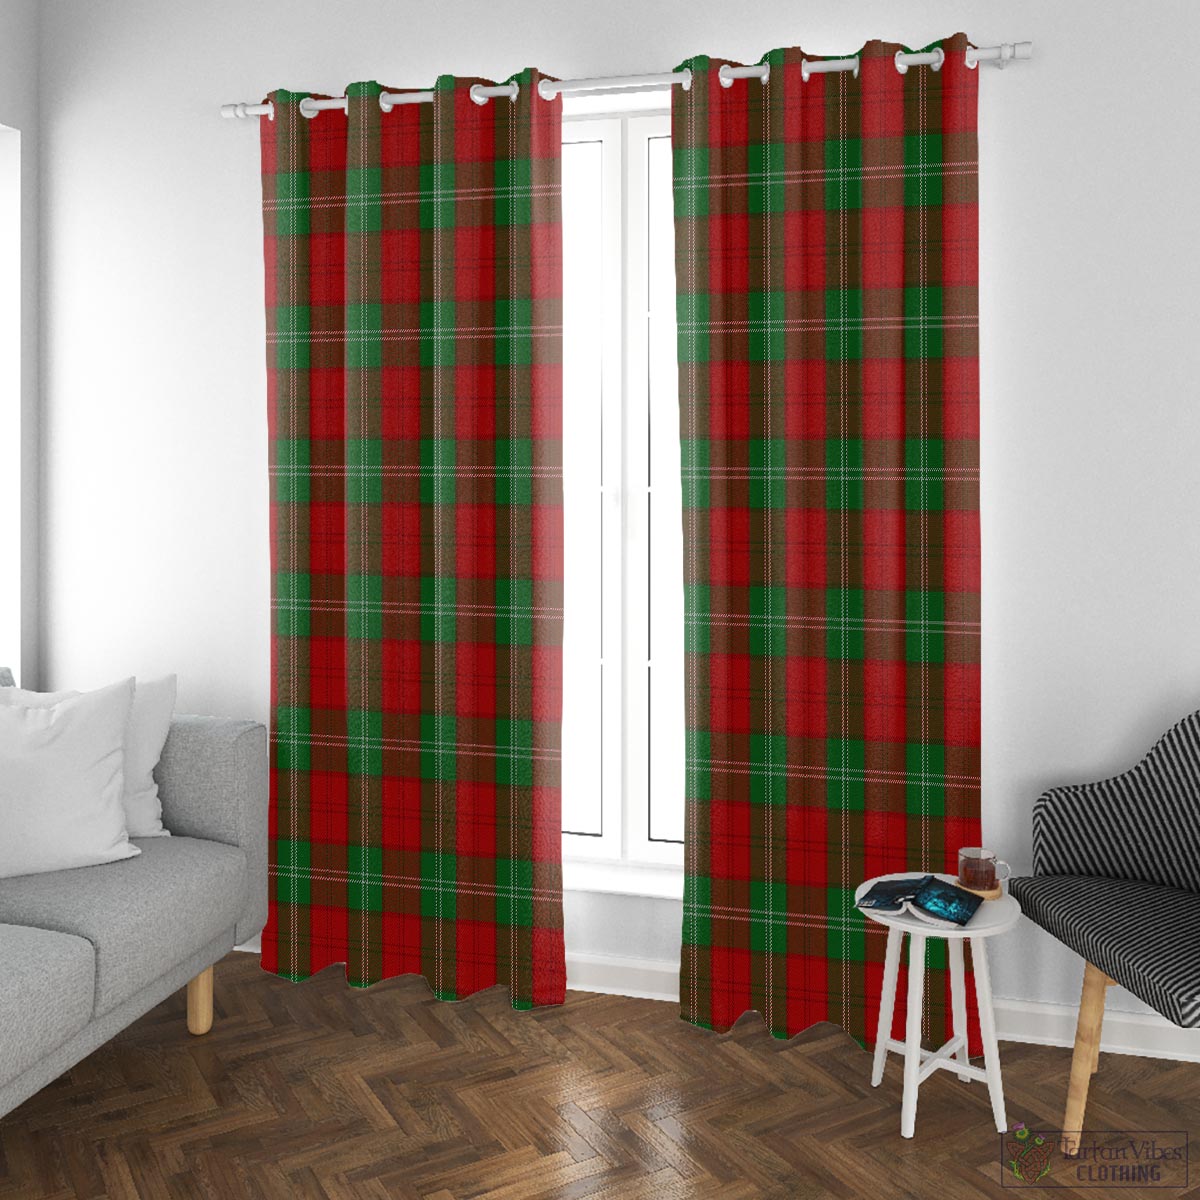 Lennox Tartan Window Curtain